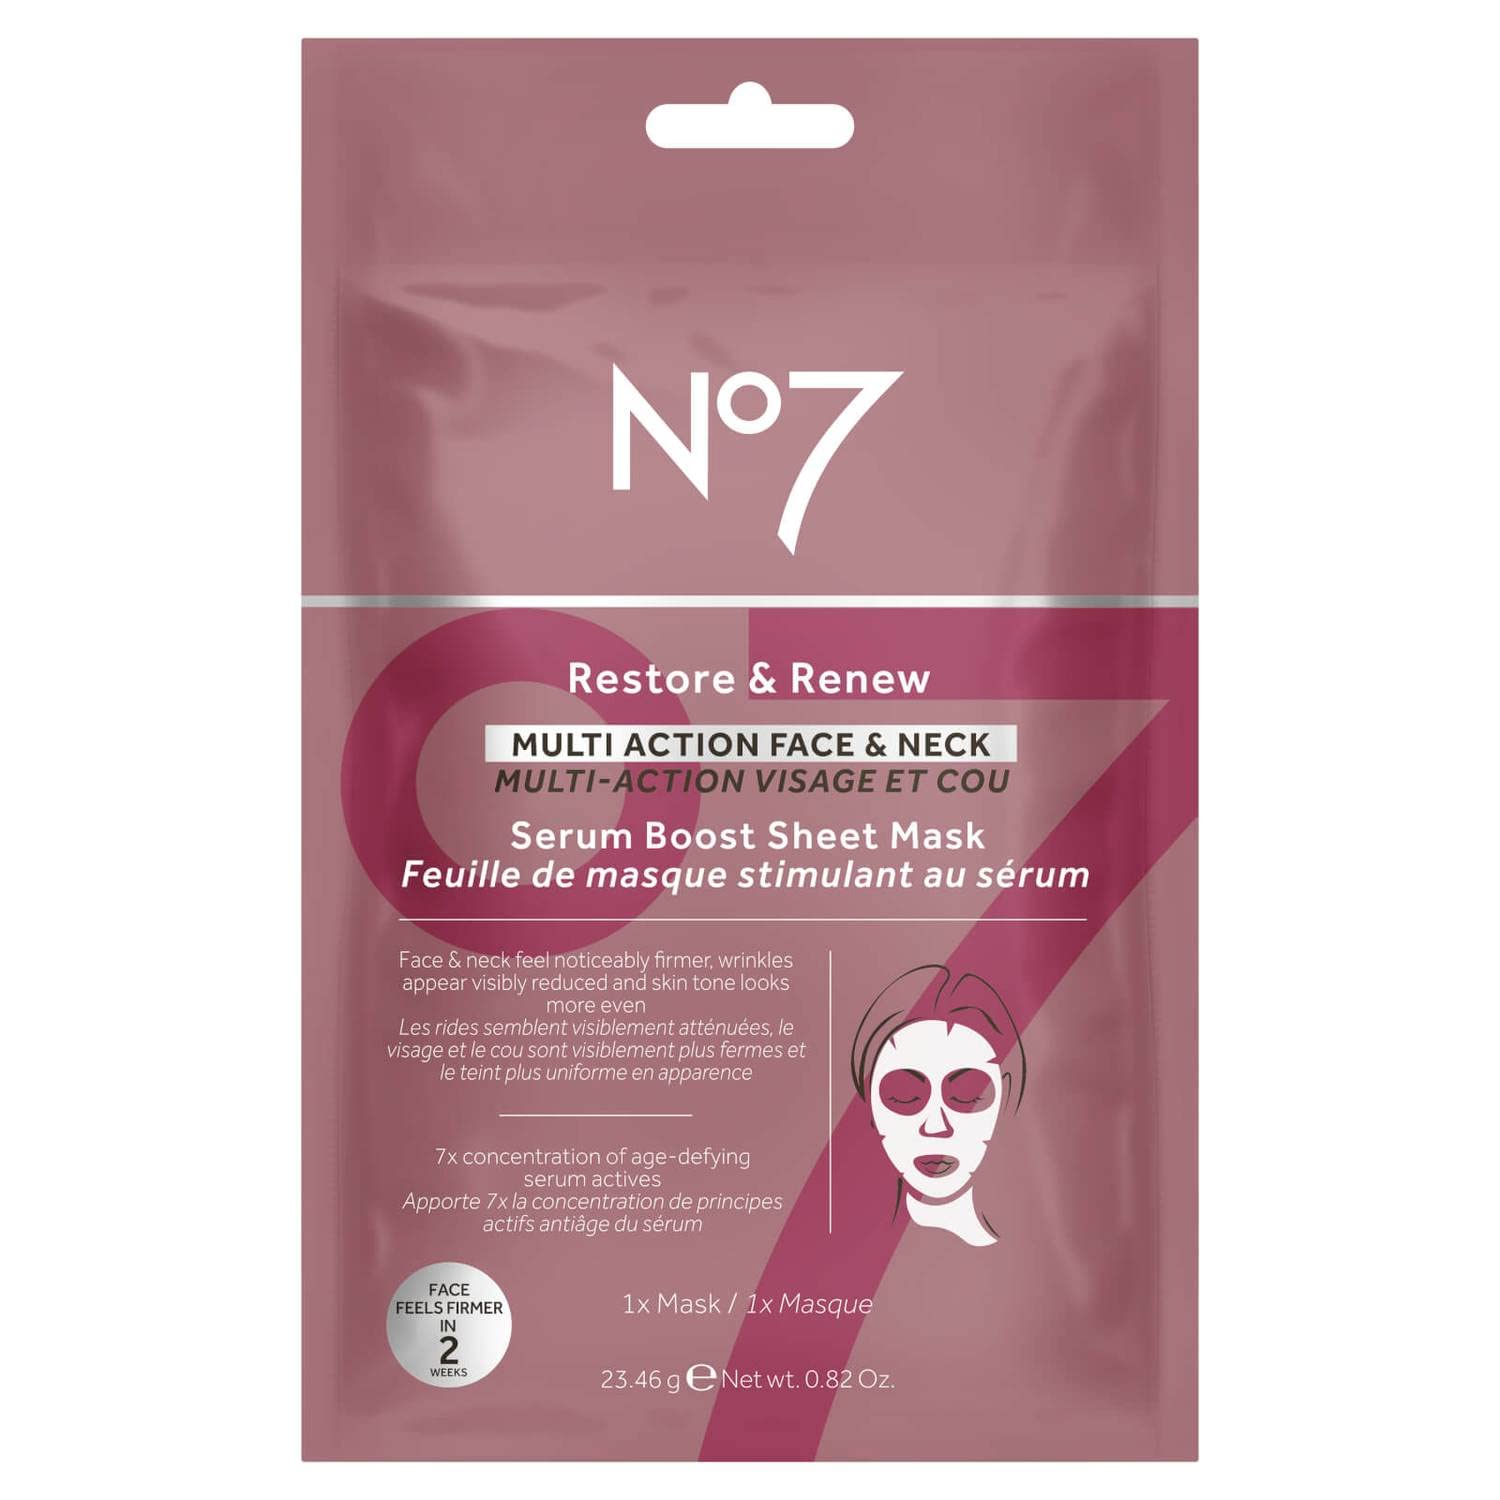 No7 Restore & Renew FACE & NECK MULTI ACTION serum boost sheet masks - Set of 4